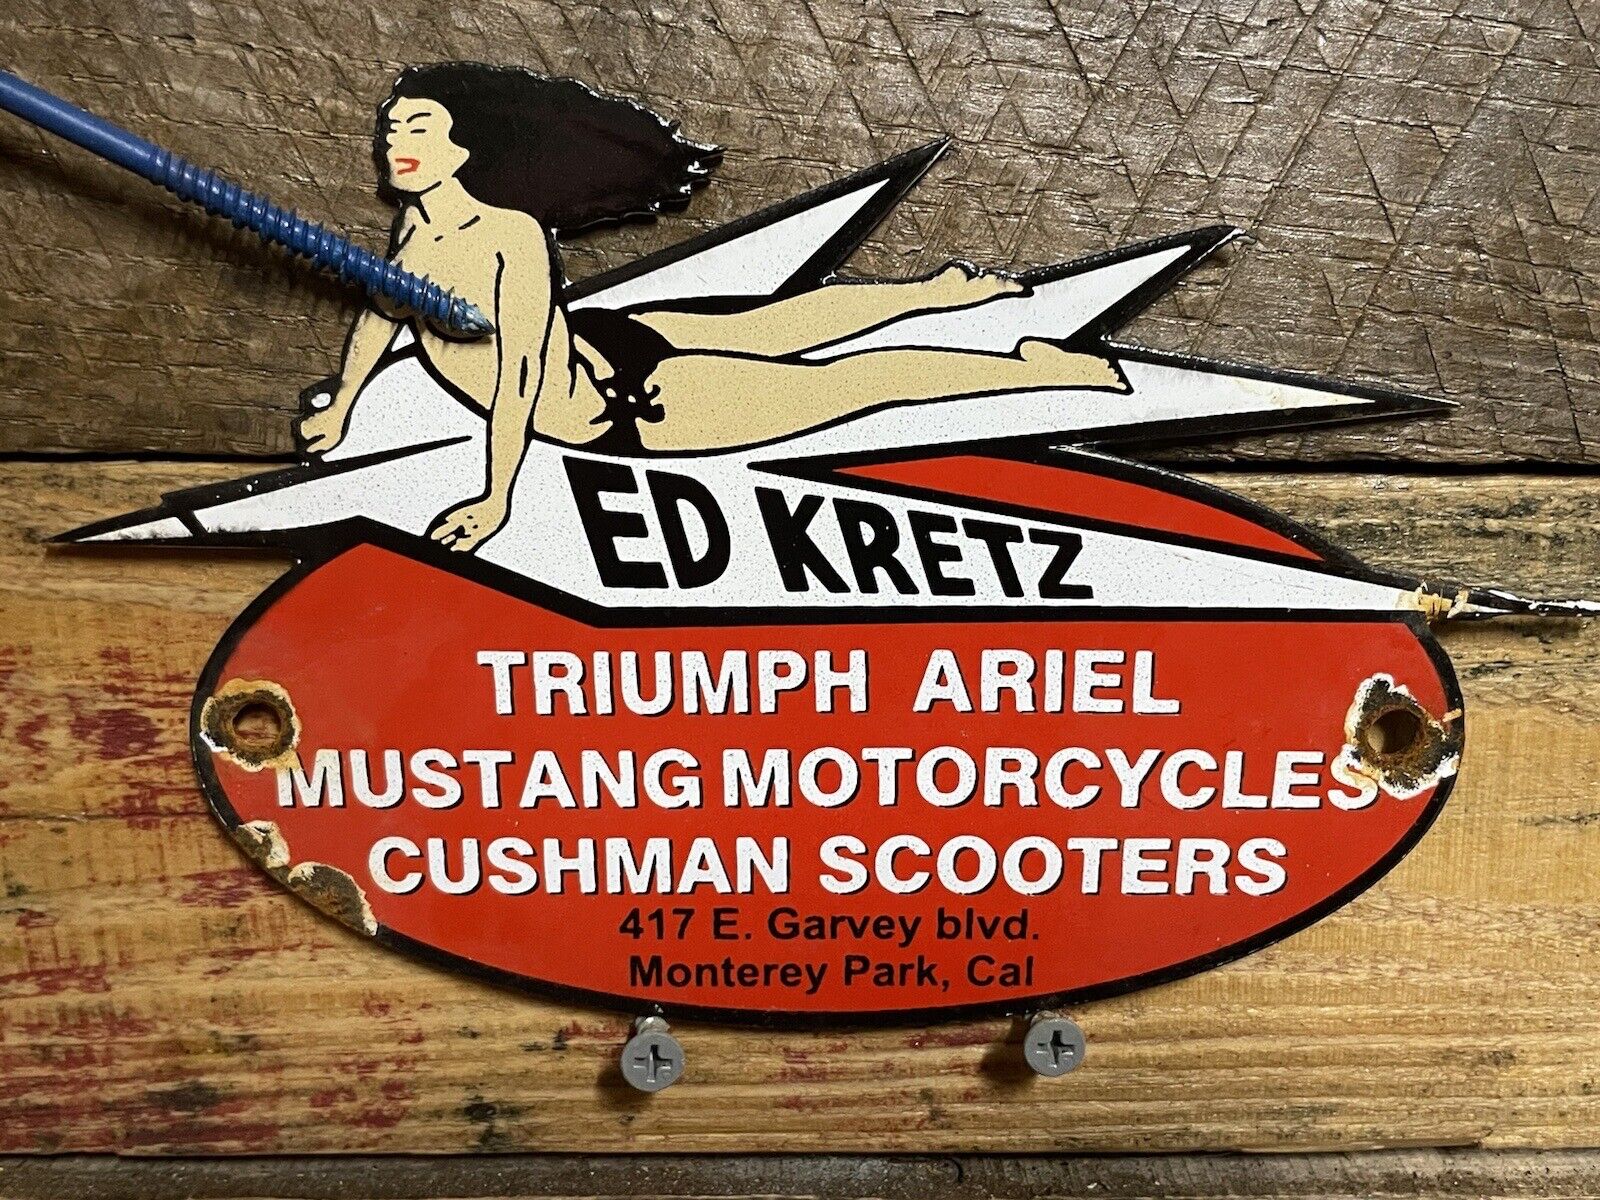 VINTAGE ED KRETZ PORCELAIN SIGN MOTORCYCLE TRIUMPH CUSHMAN MUSTANG GAS & OIL